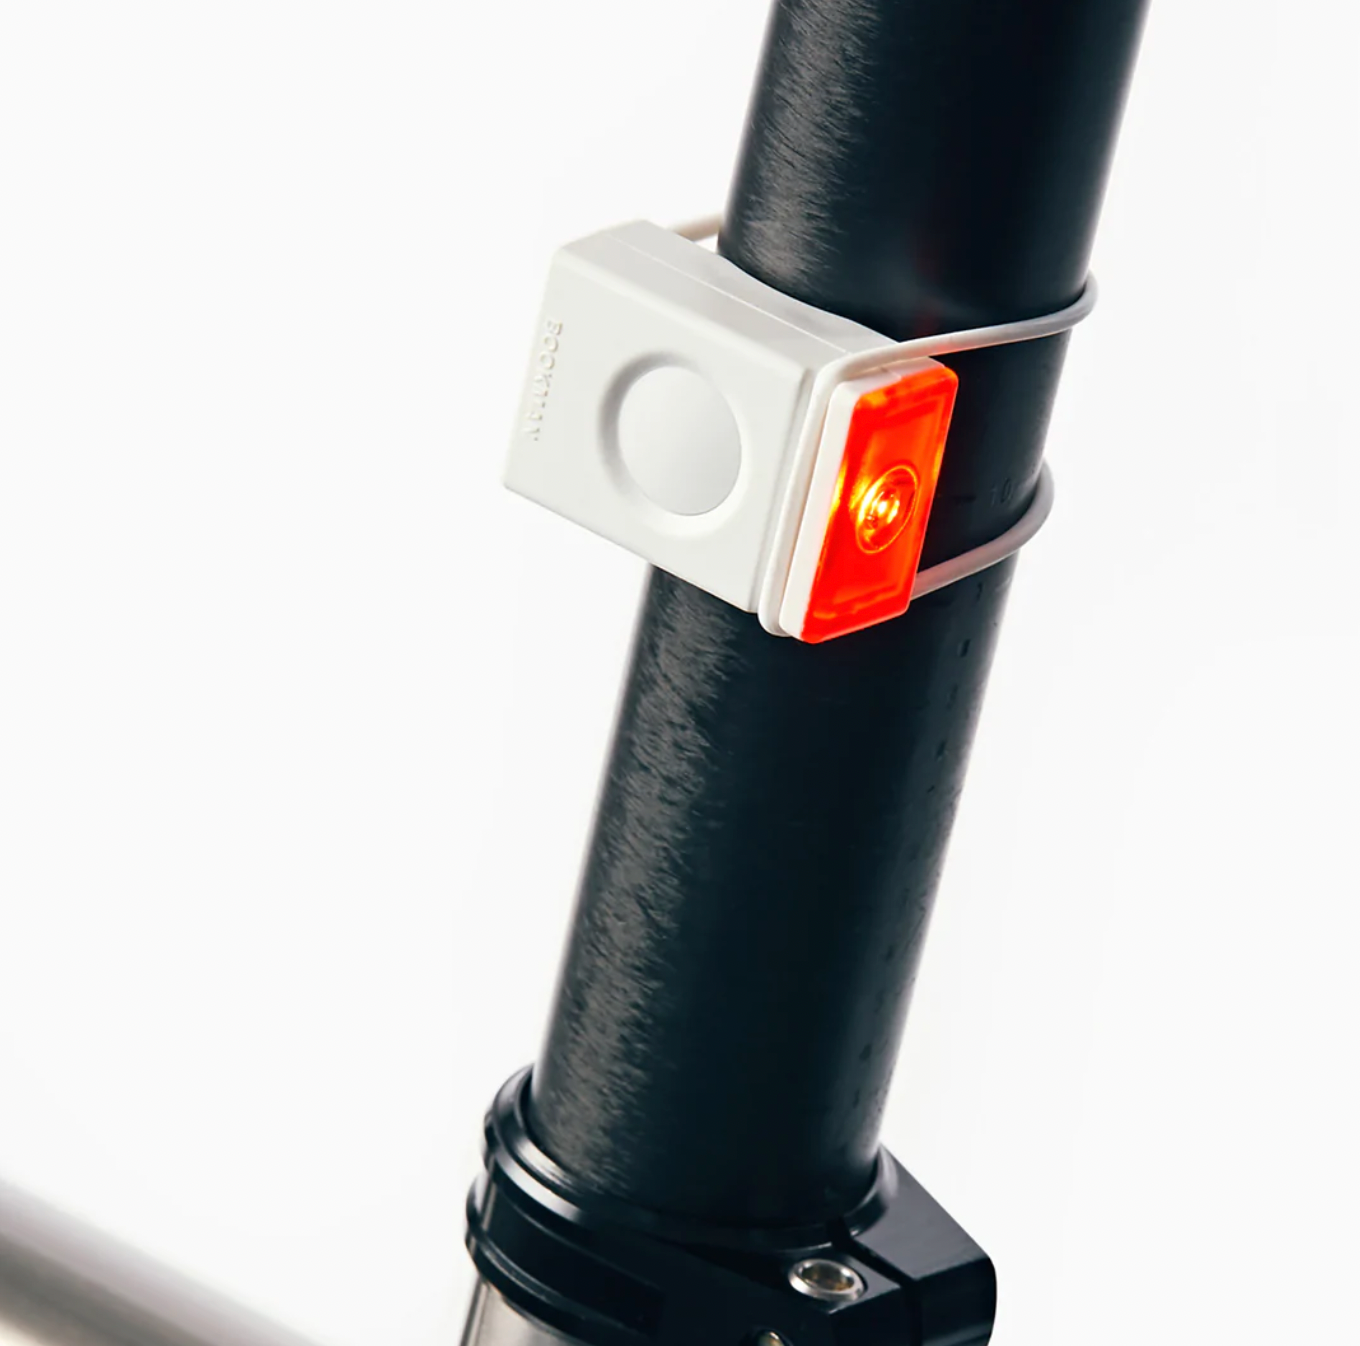 Bookman - Block Light for rear bike